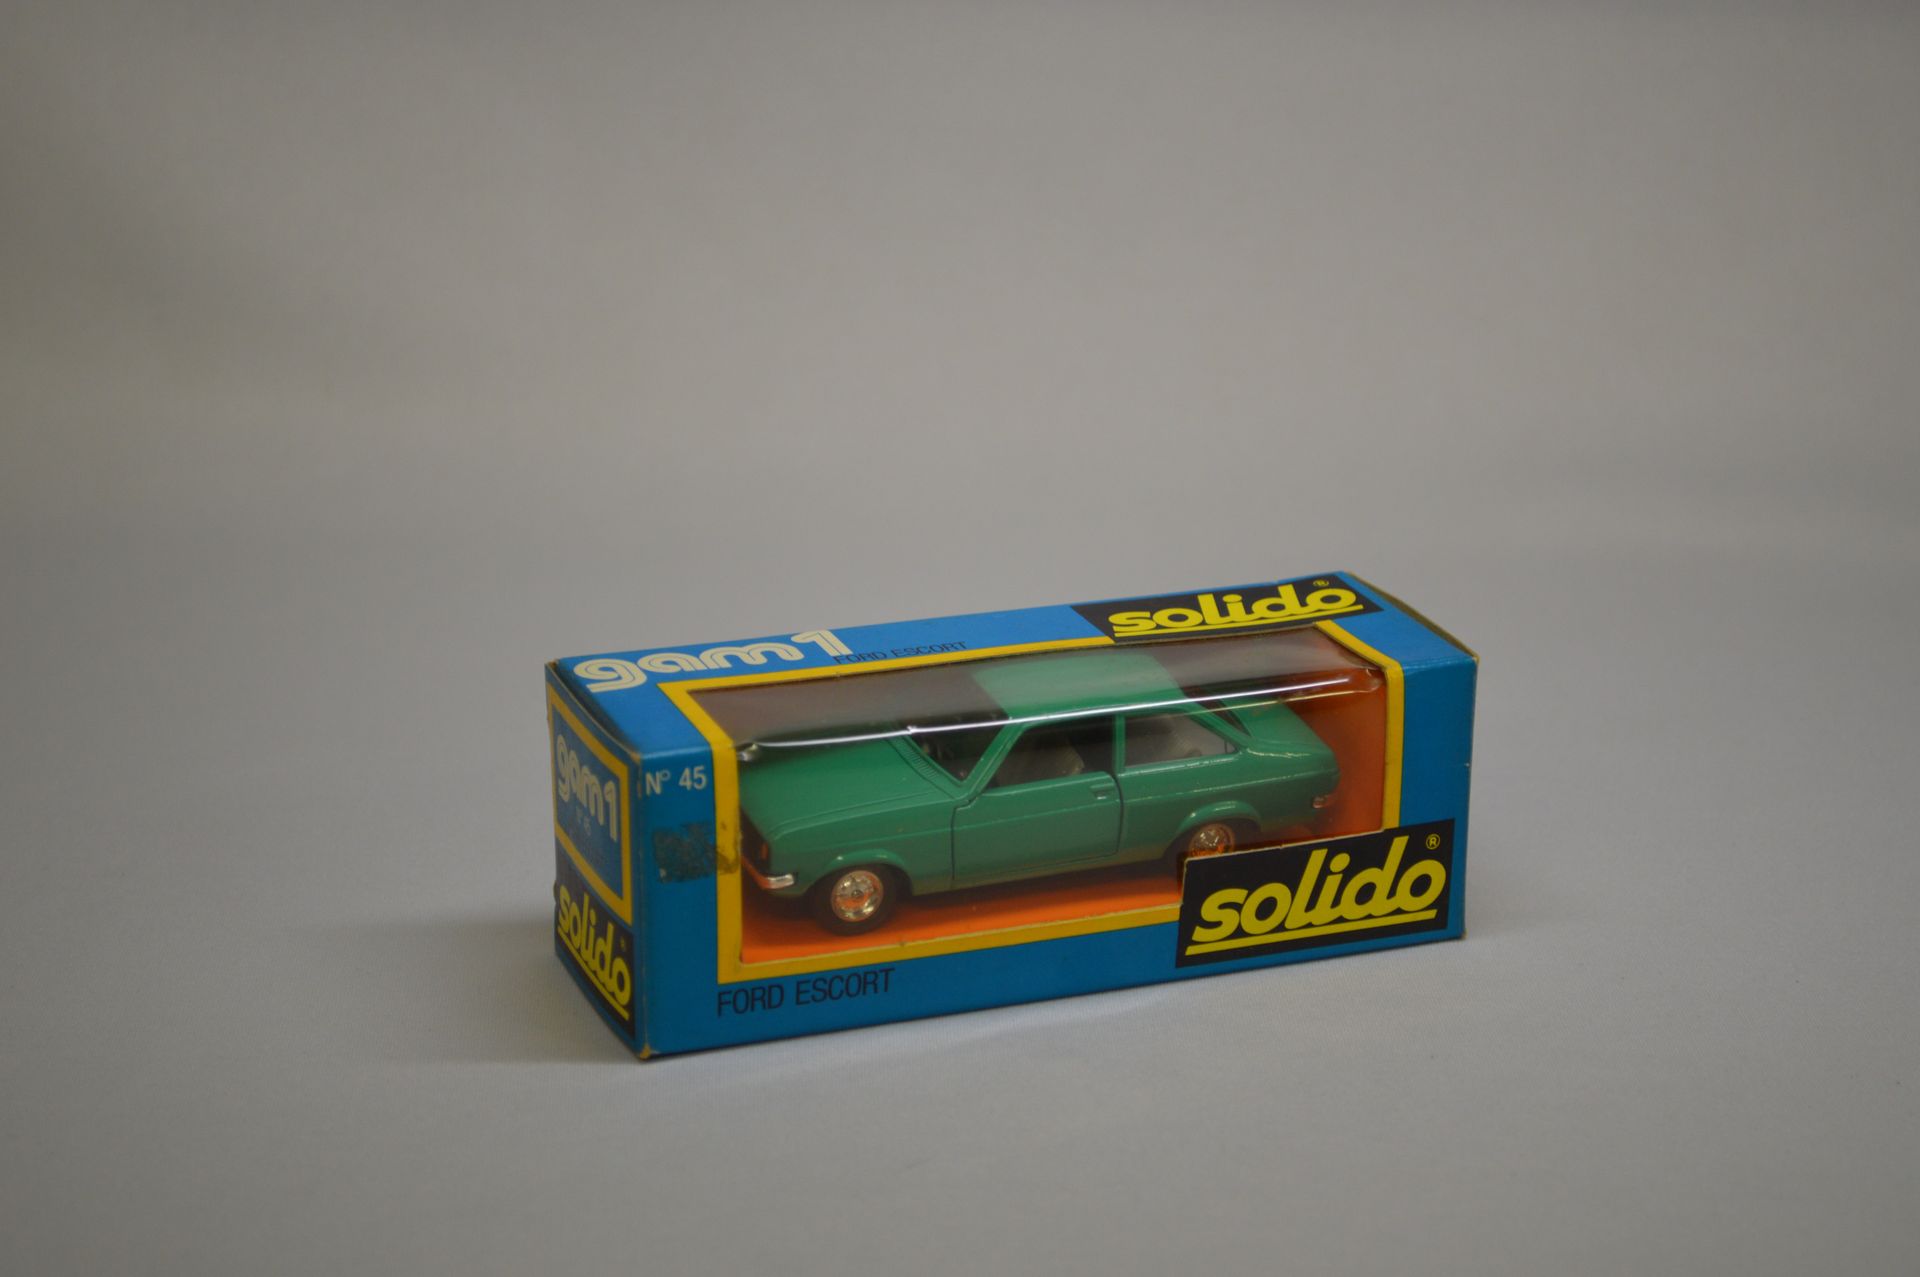 Null SOLIDO - GAM 1 - 房车：福特Escort，编号45，绿色。

原装盒。出处：一位伟大收藏家的遗产。